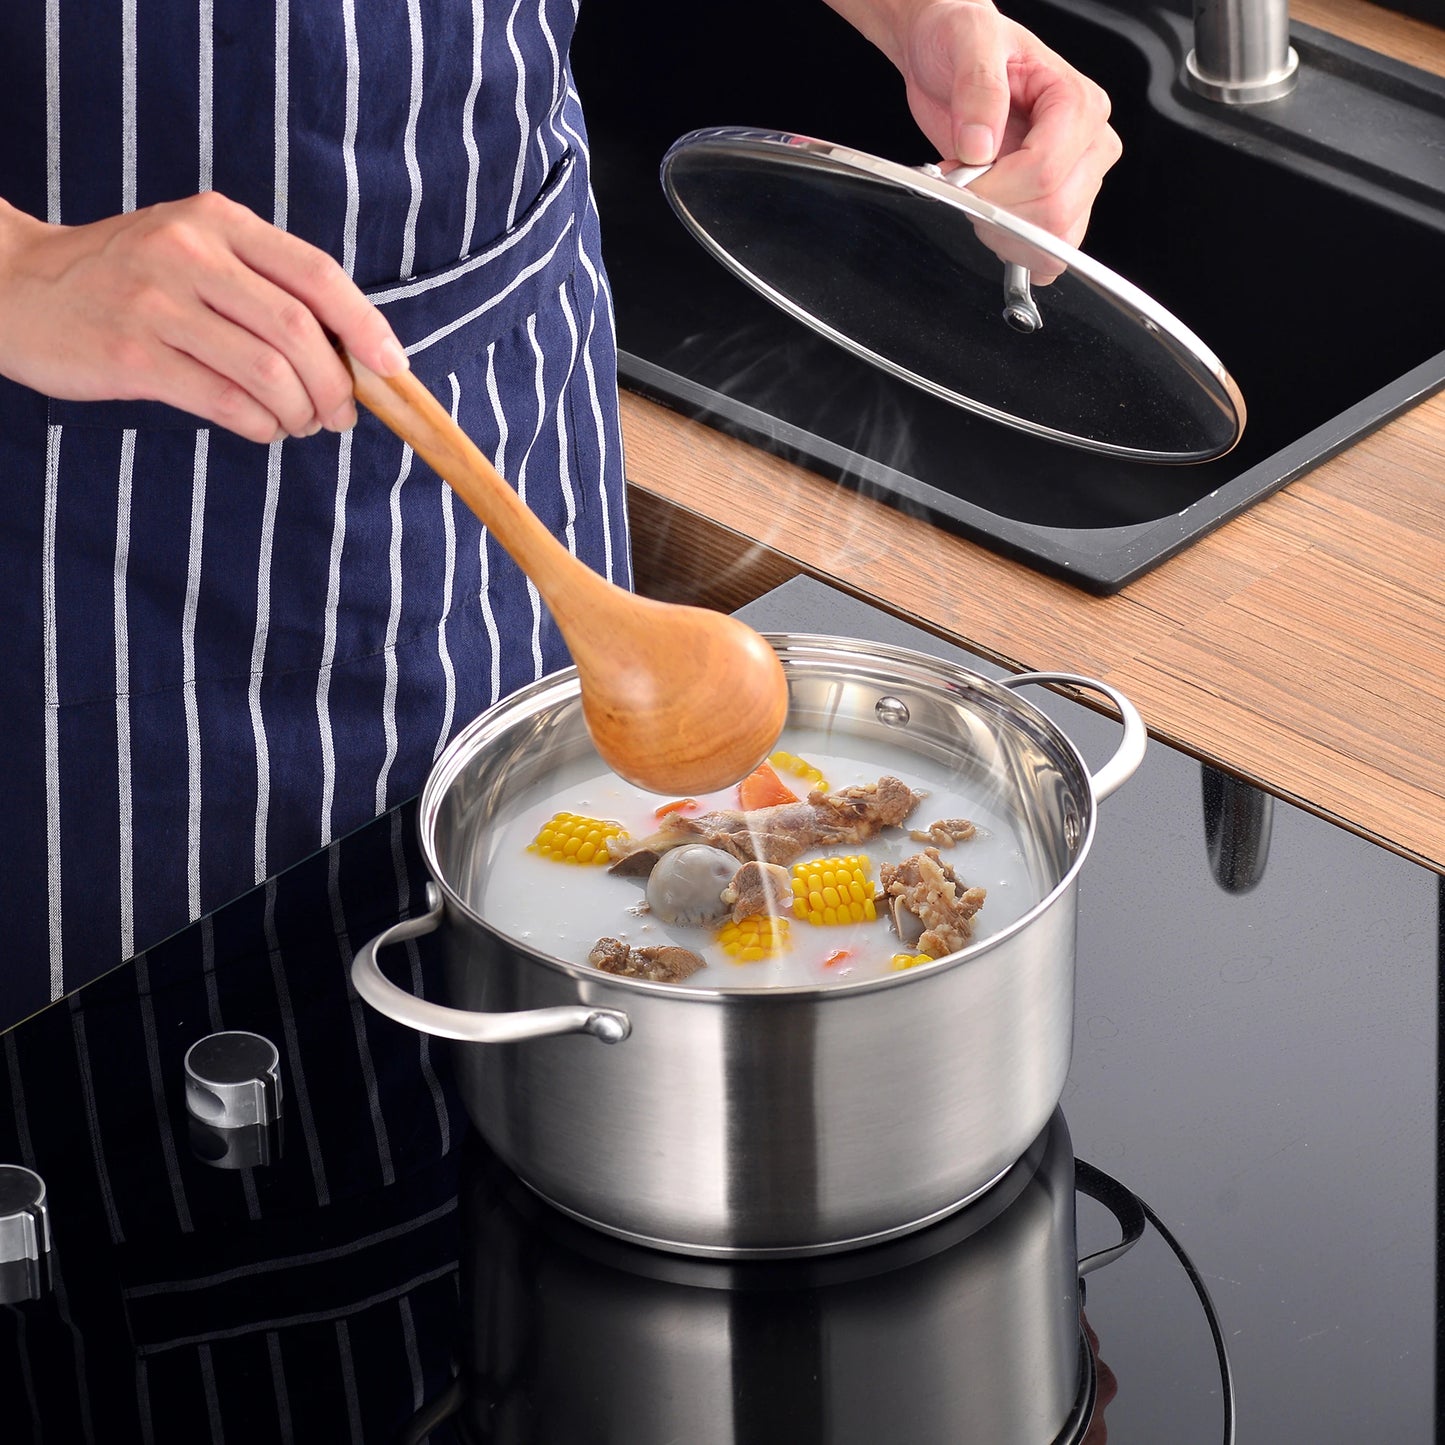 Velaze Stainless Steel Cookware Set - Versatile Induction Ready